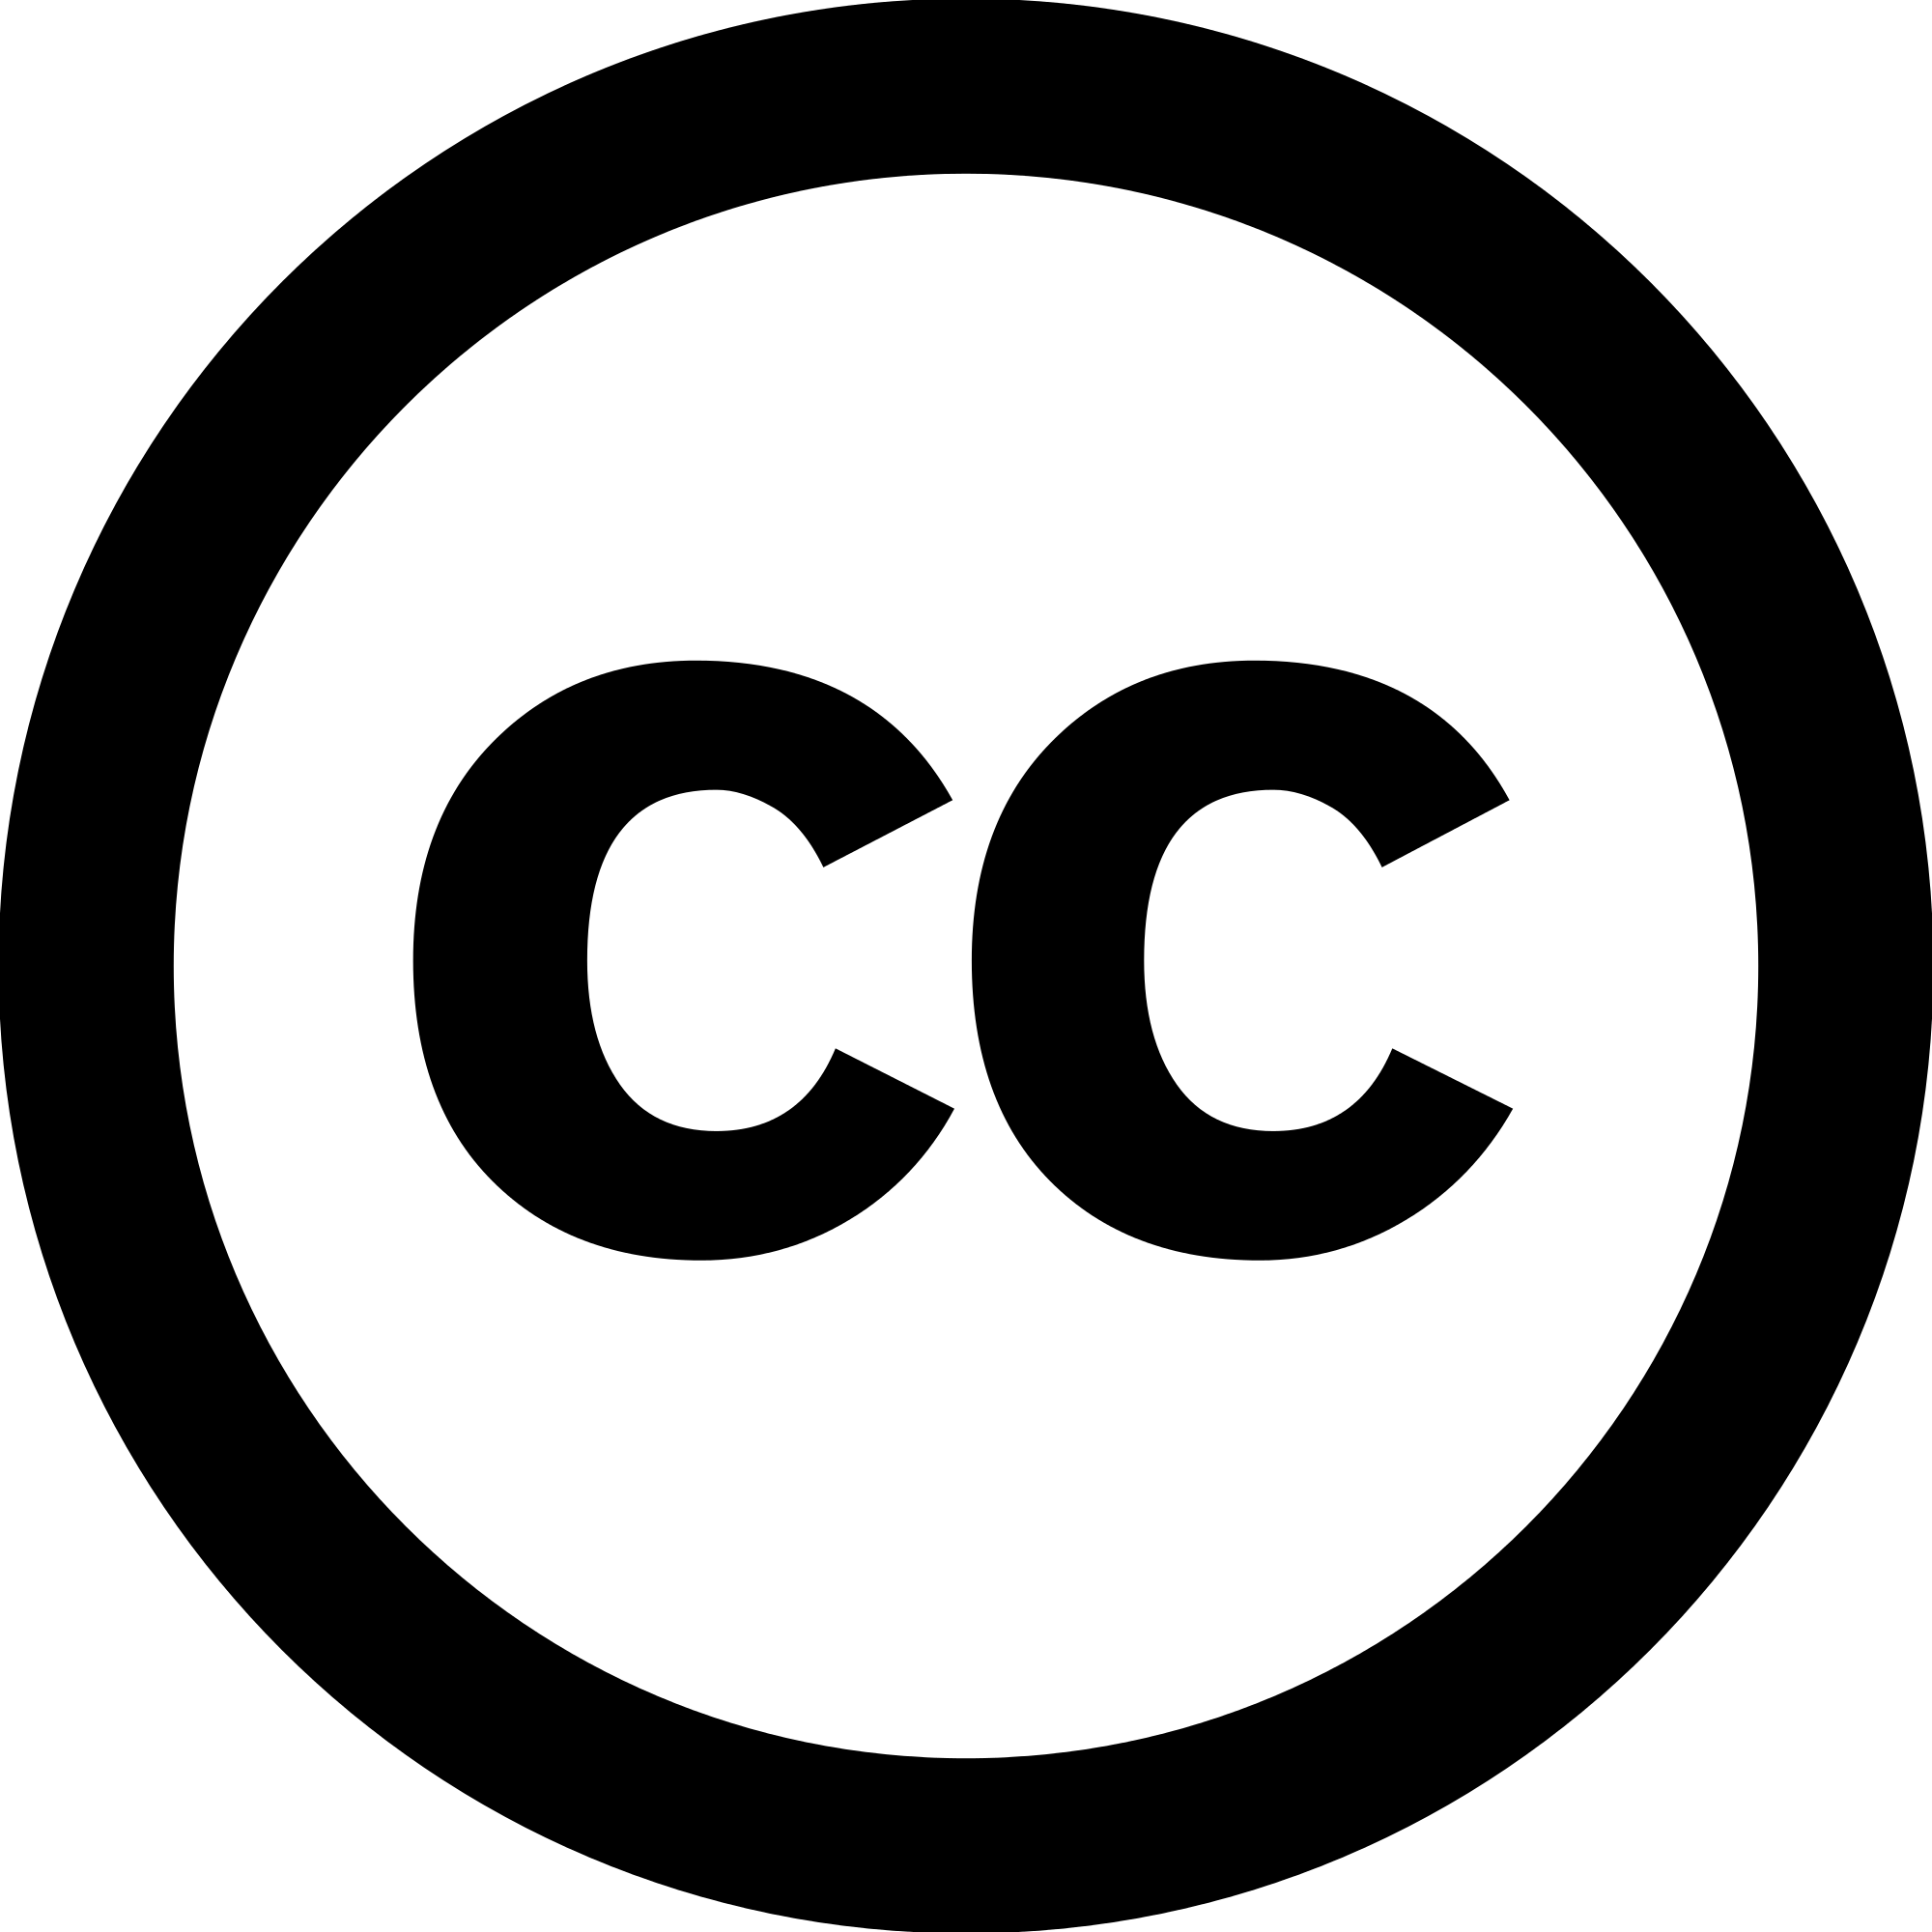 CC and White Logo - File:Cc-white.svg - Wikimedia Commons